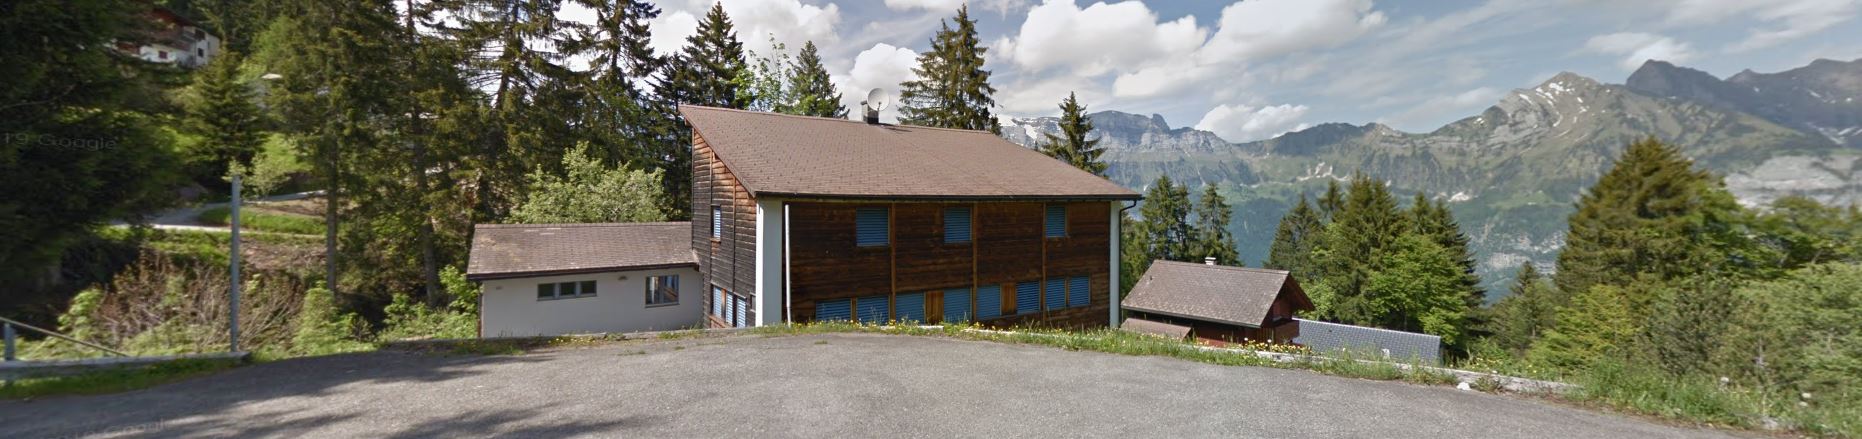 Skihaus SKD auf Google Streetview (Bild: Google Streetview)